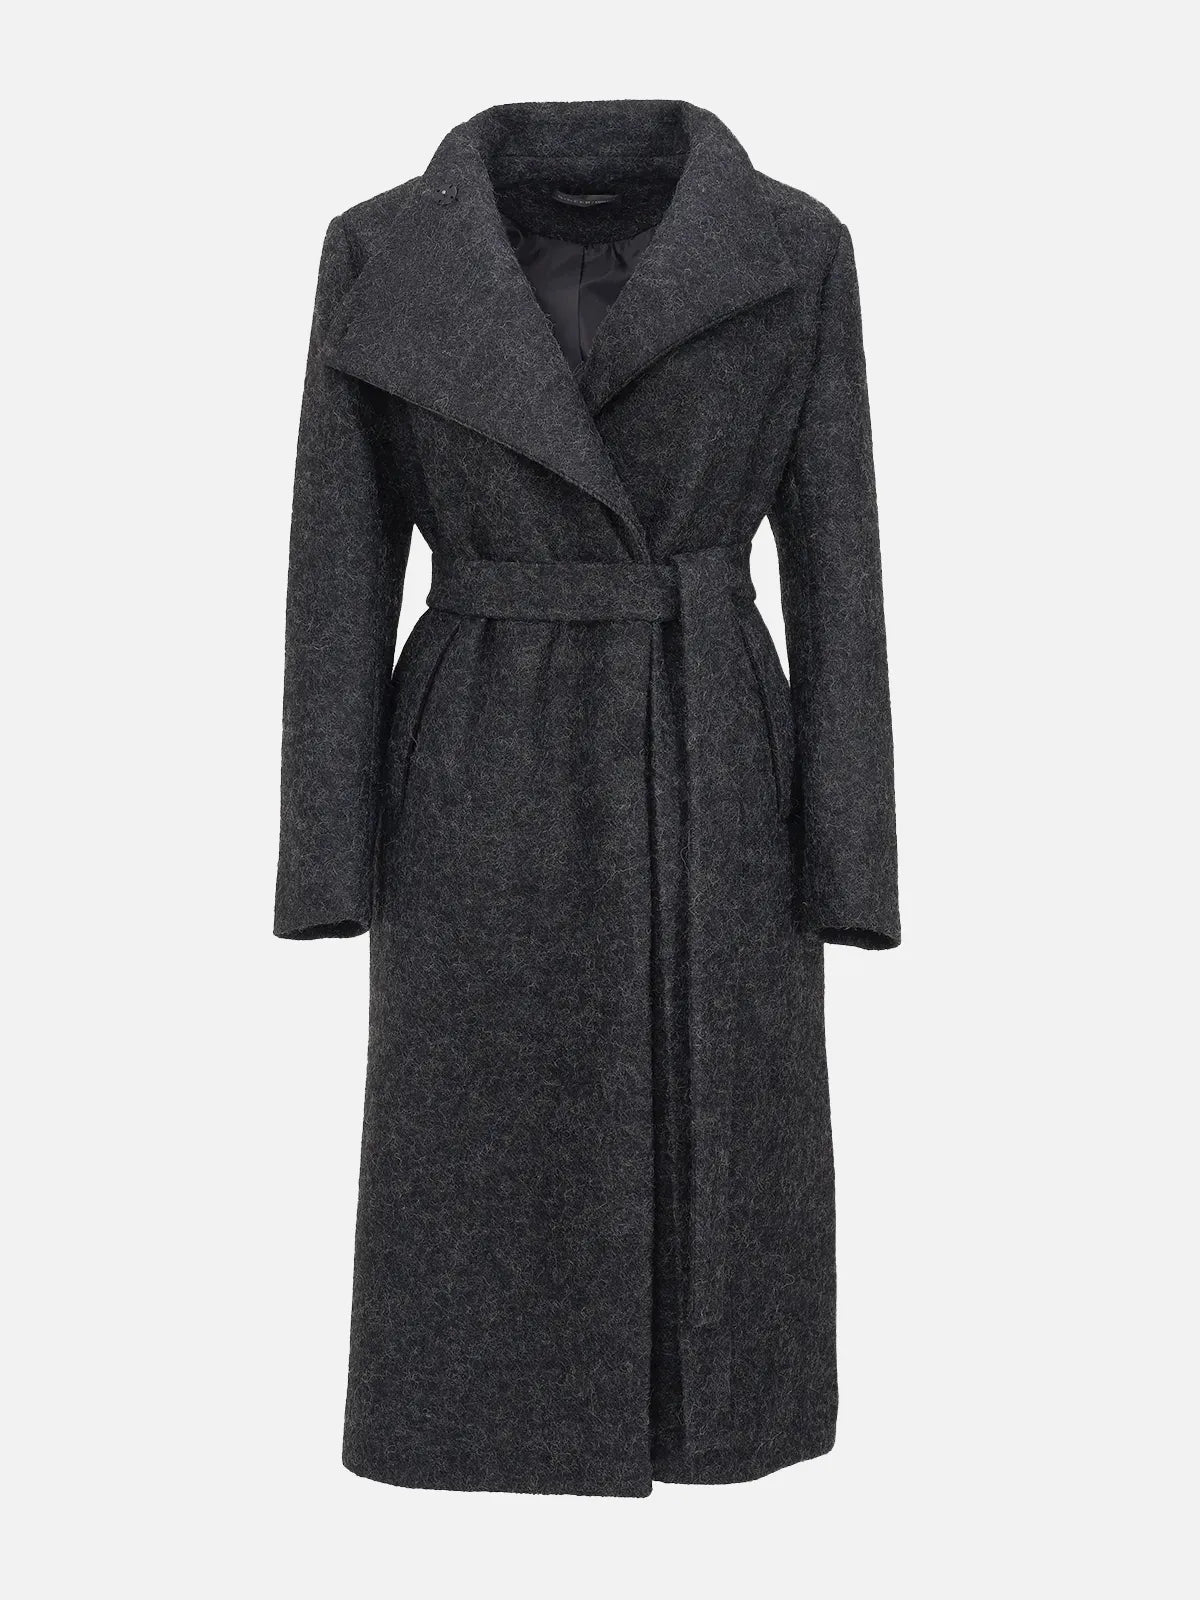 Elegant charcoal black wool coat with lapel collar